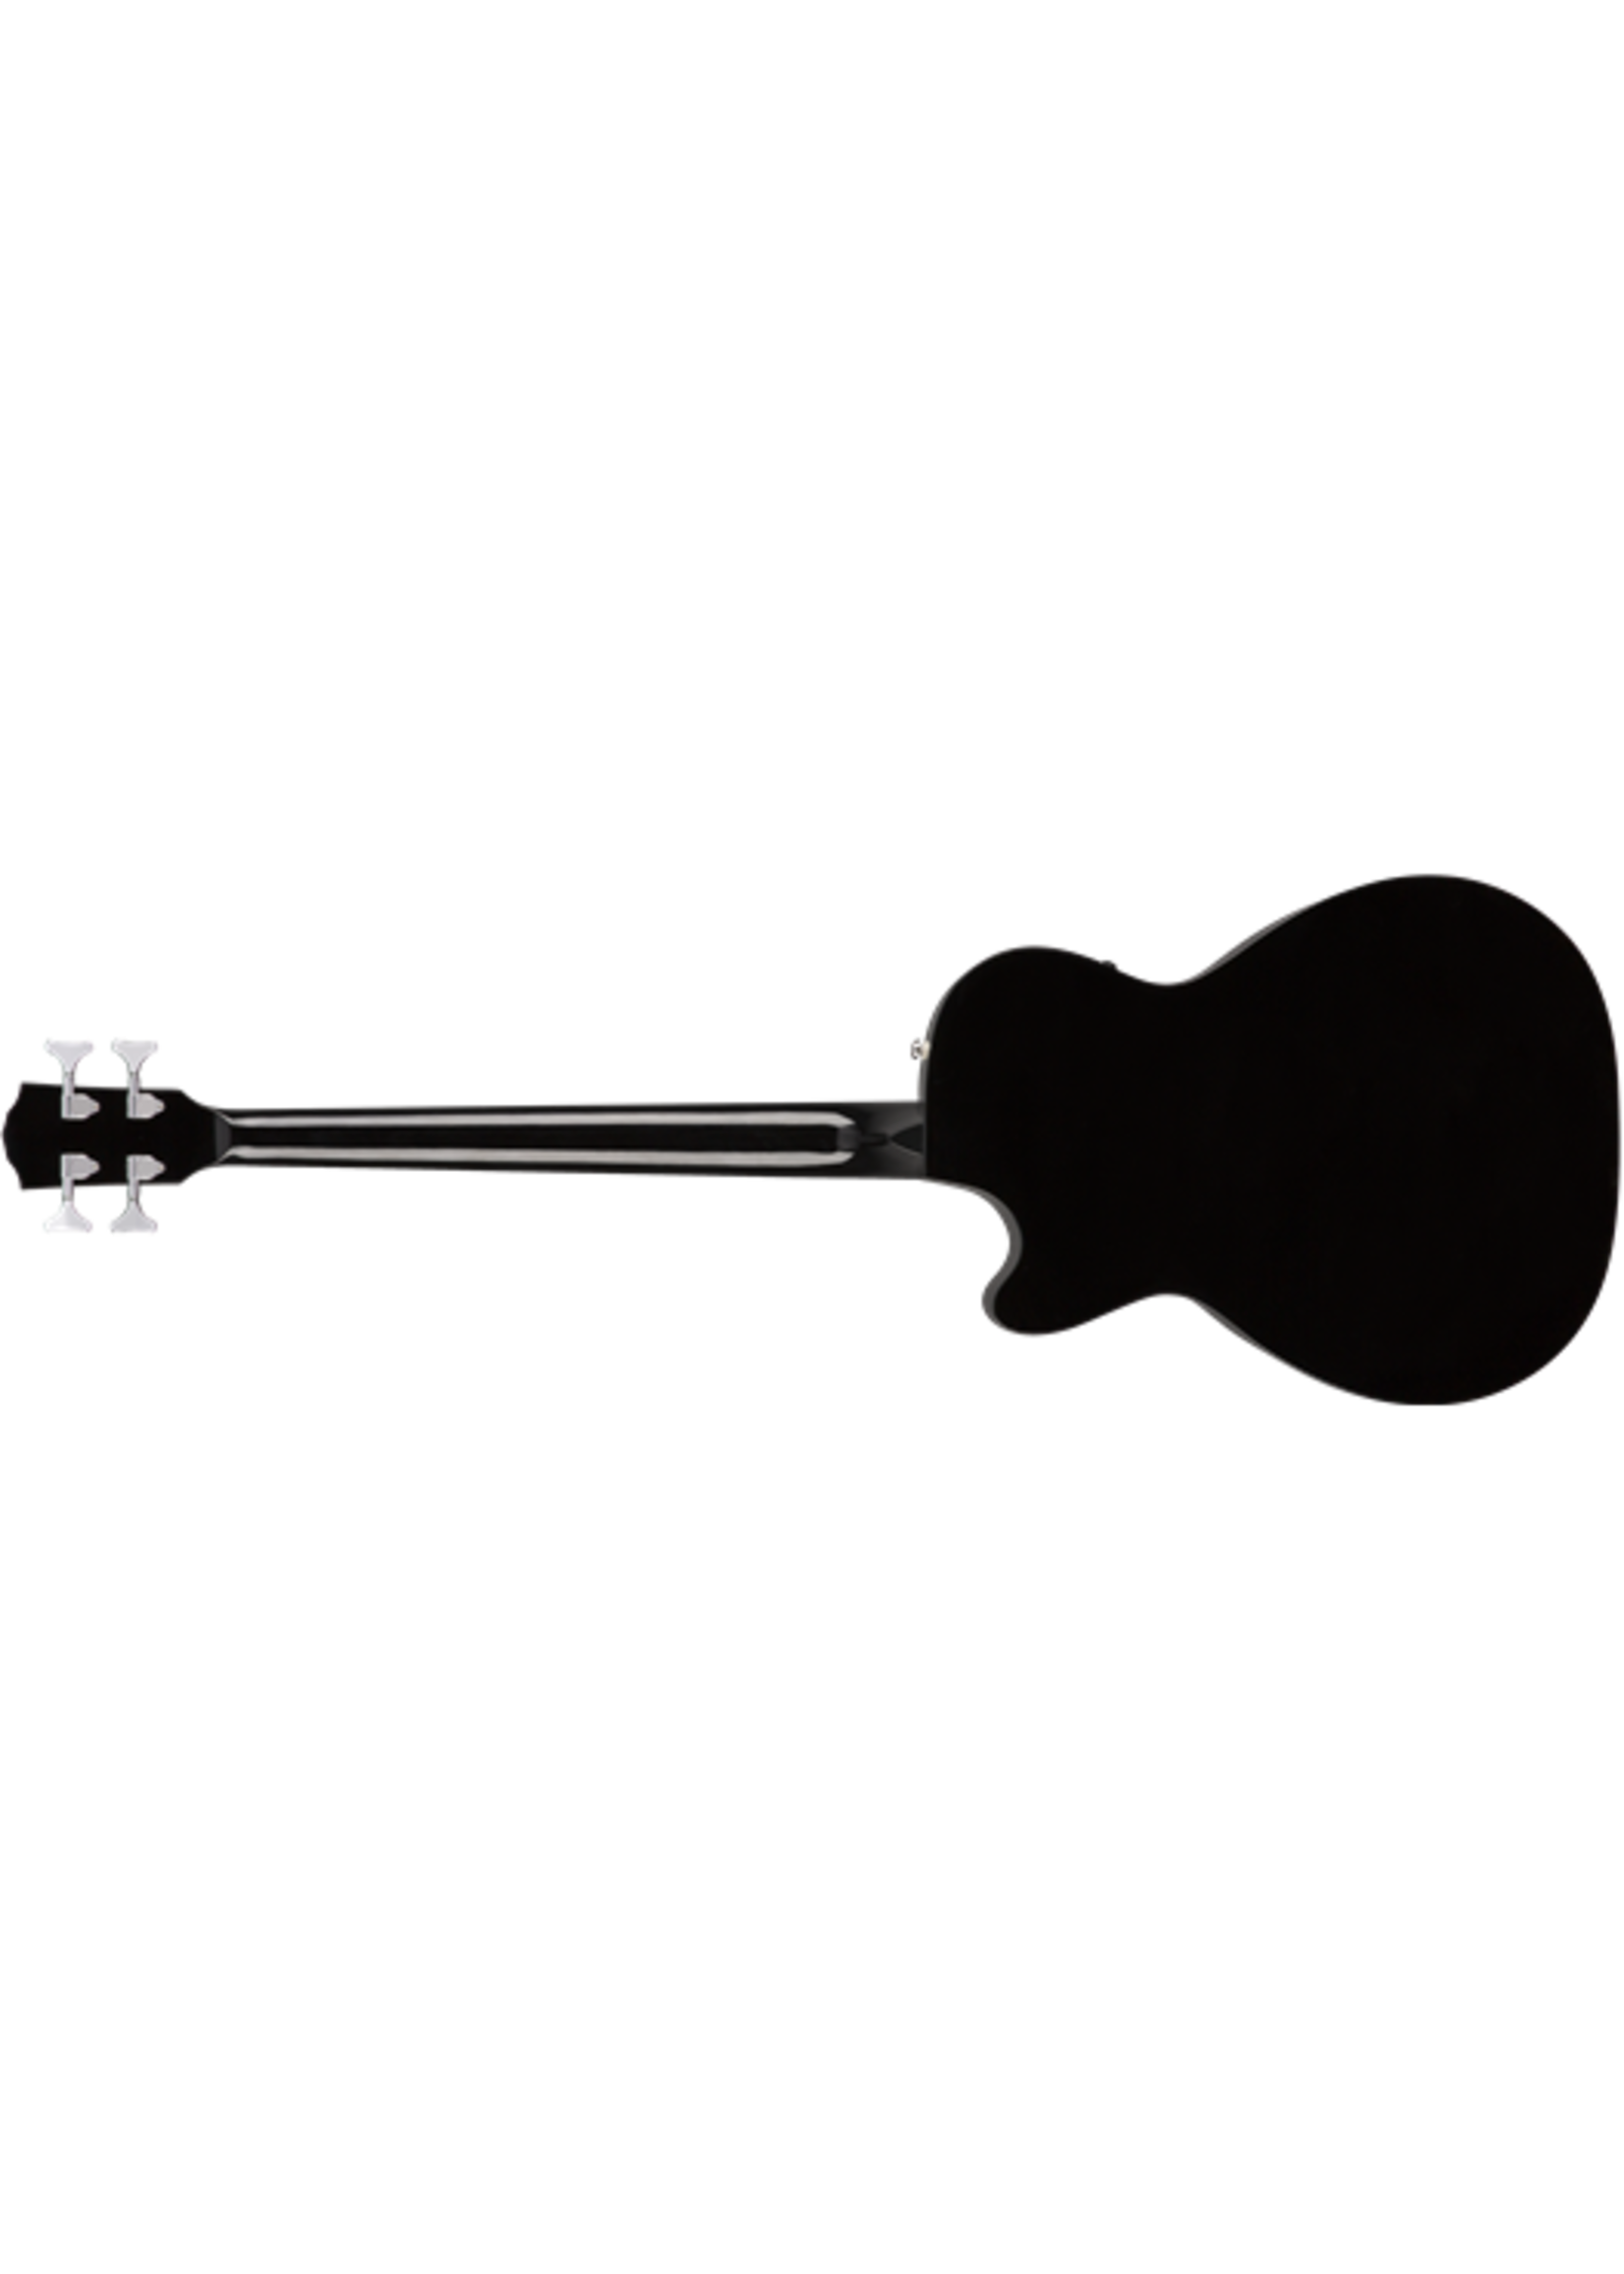 Fender Fender 0970183006 CB-60SCE Acoustic Bass, Laurel Fingerboard, Black